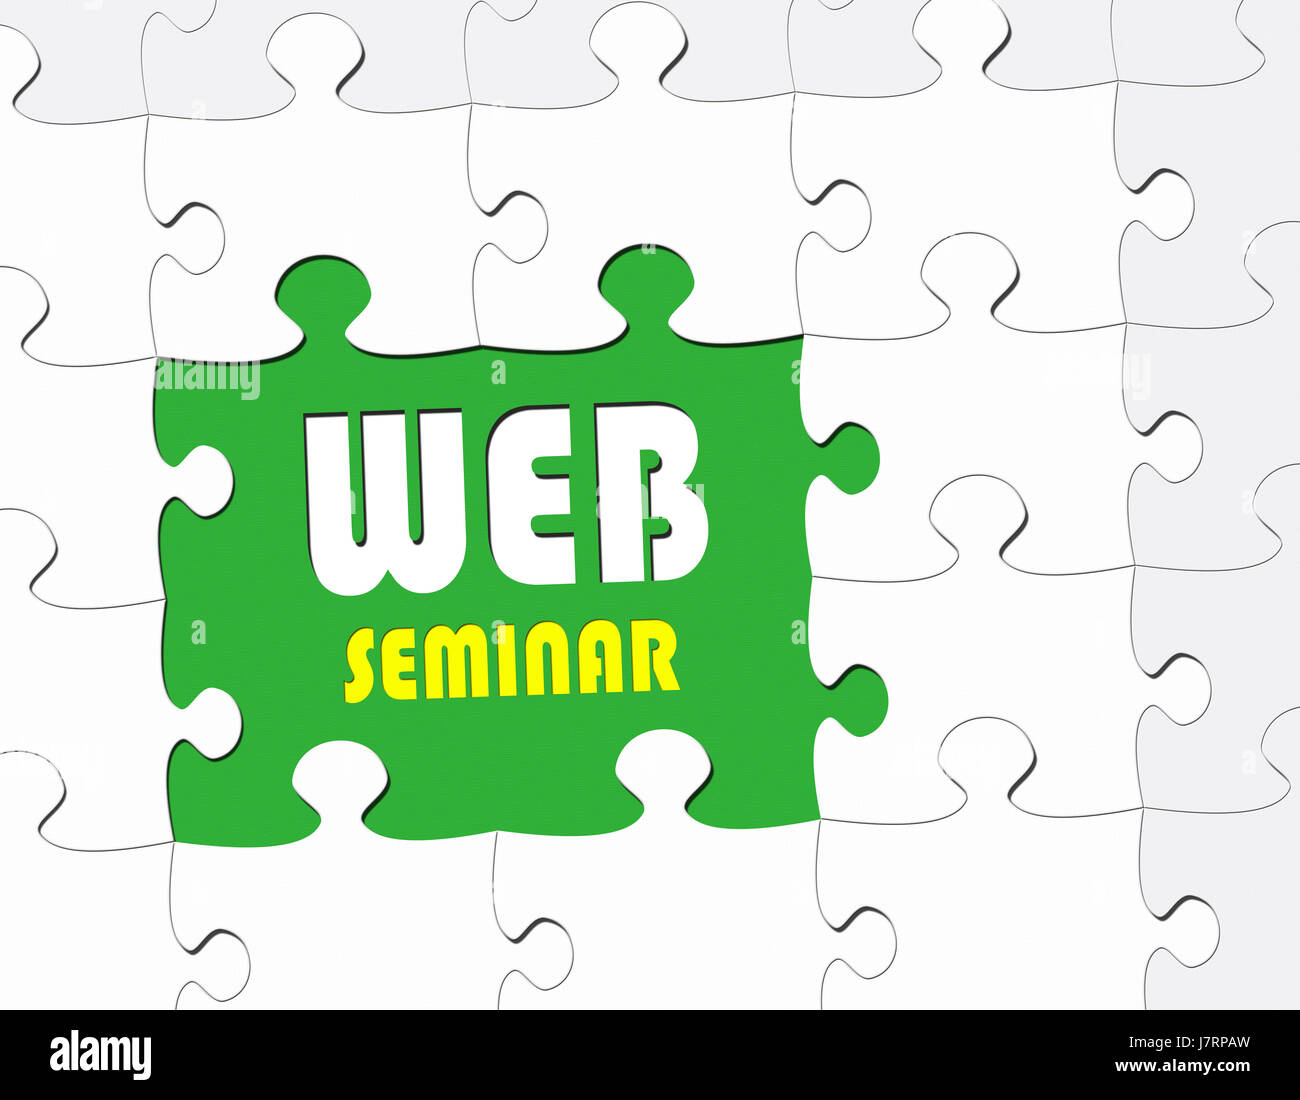 Seminari Seminari internet www worldwideweb net web online segno seminario di segnale Foto Stock